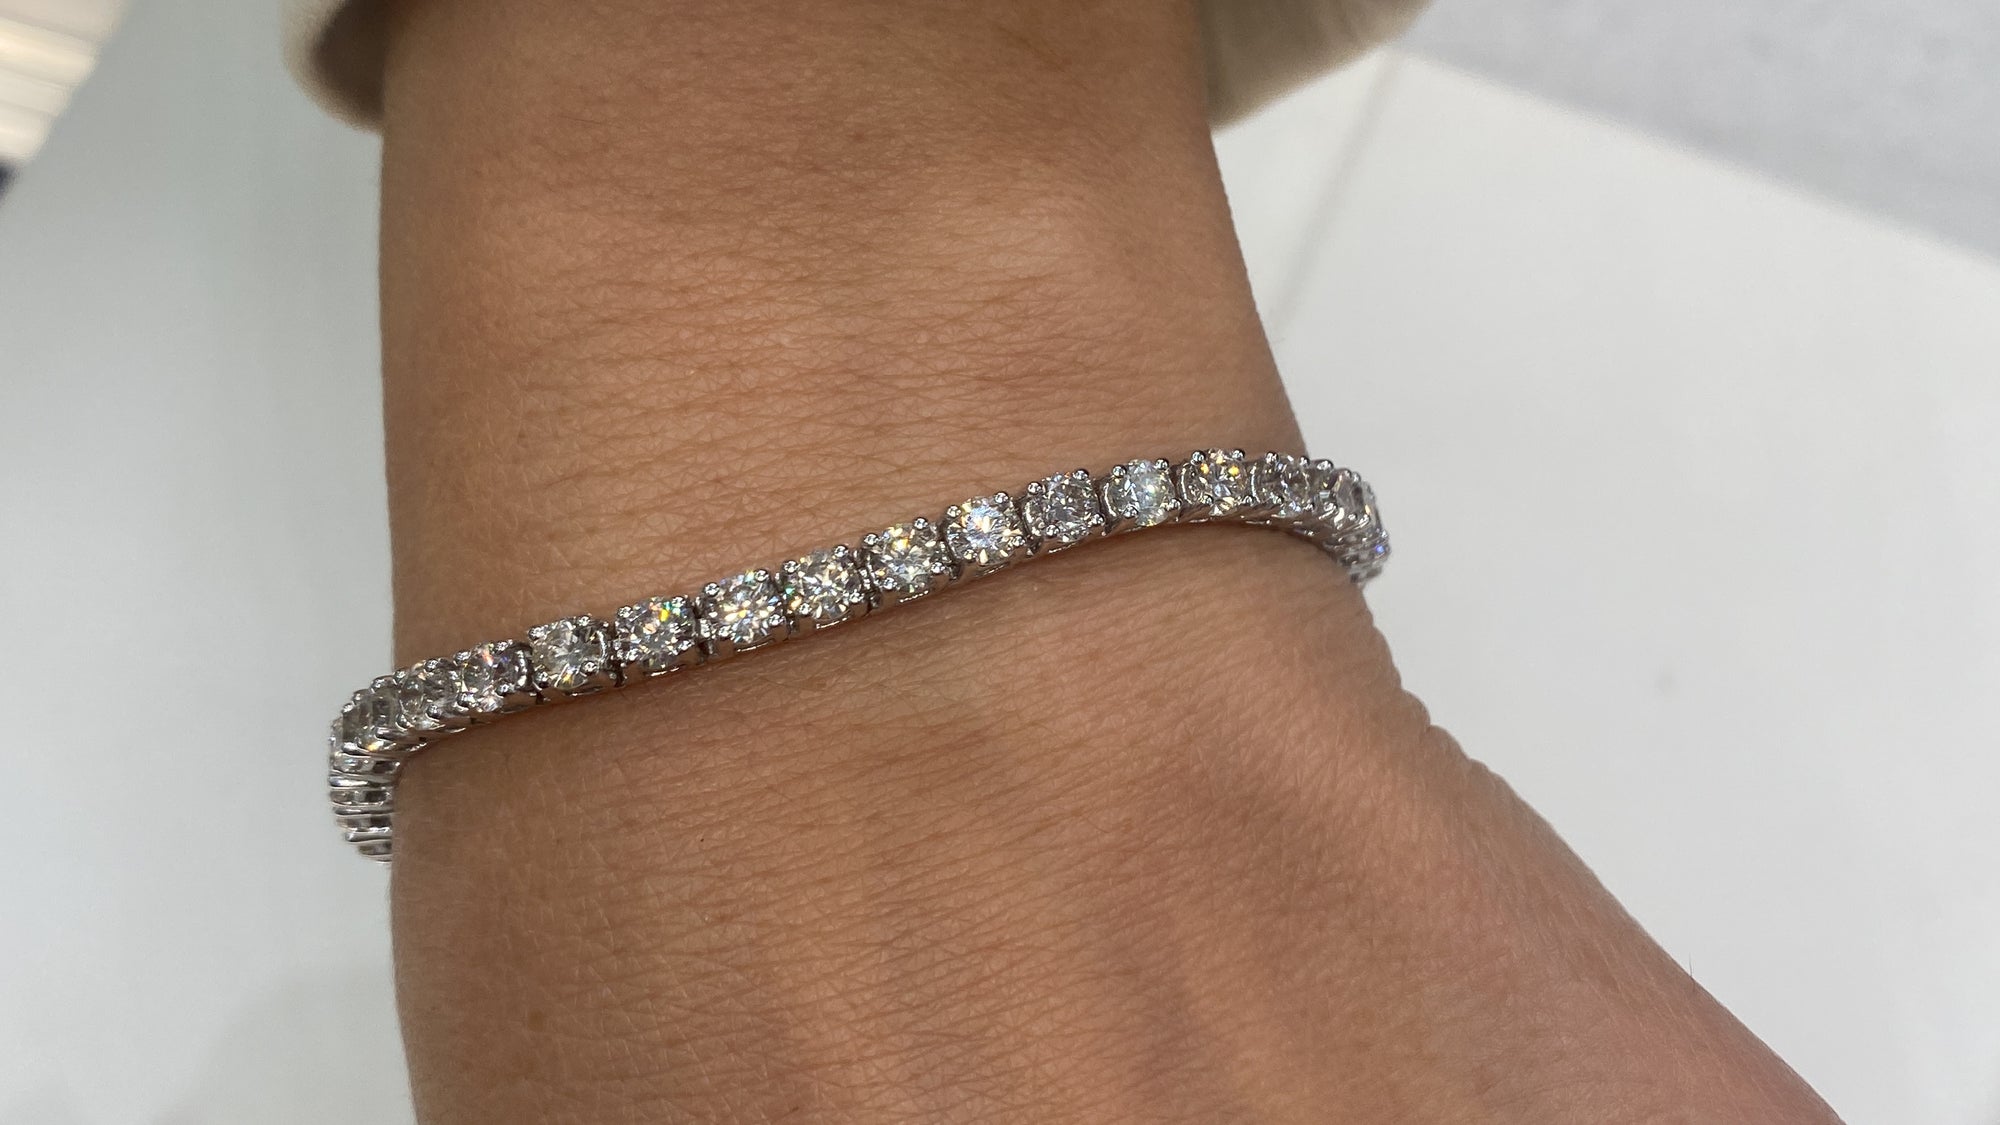 10 carat diamond tennis bracelet - YouTube